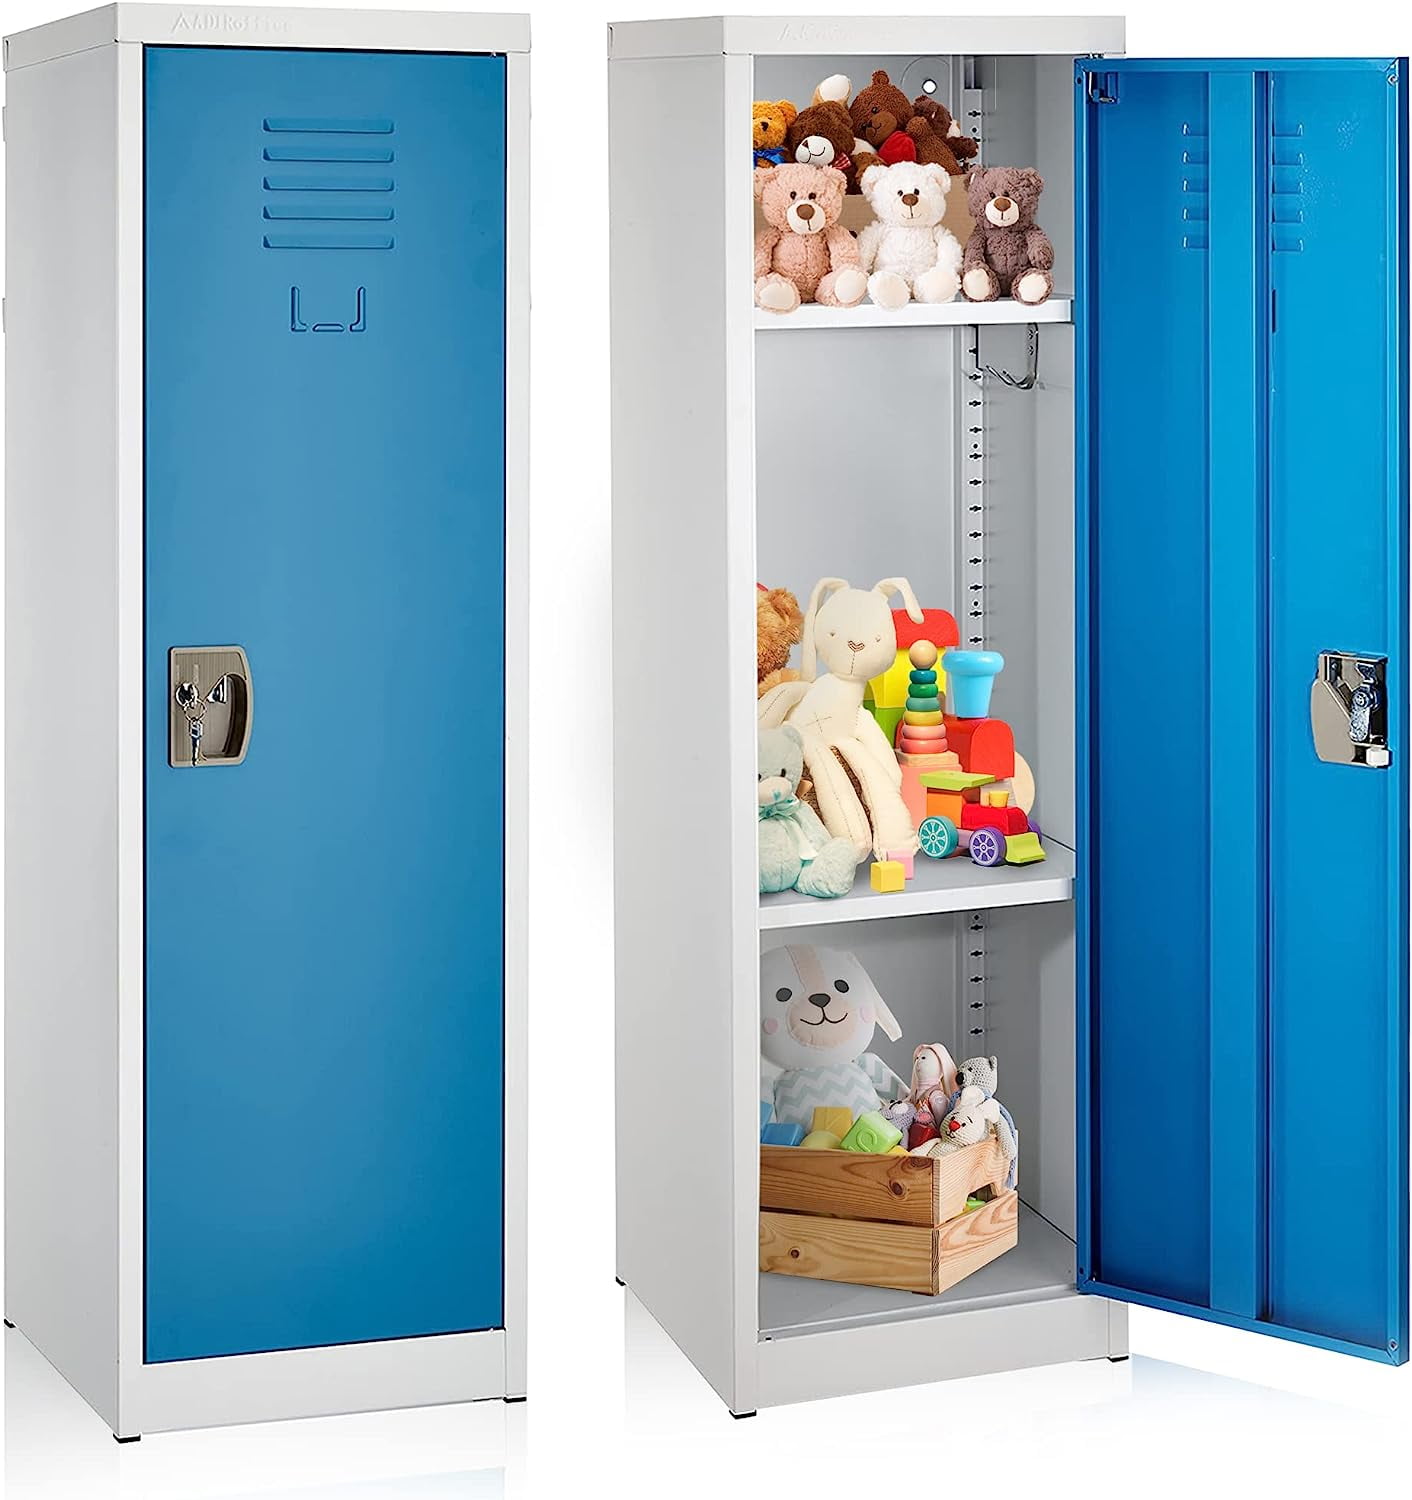 Lista HS Sliding Door Shelf Cabinet - 3 Adjustable Shelf 1 Bottom - Lista  Cabinets